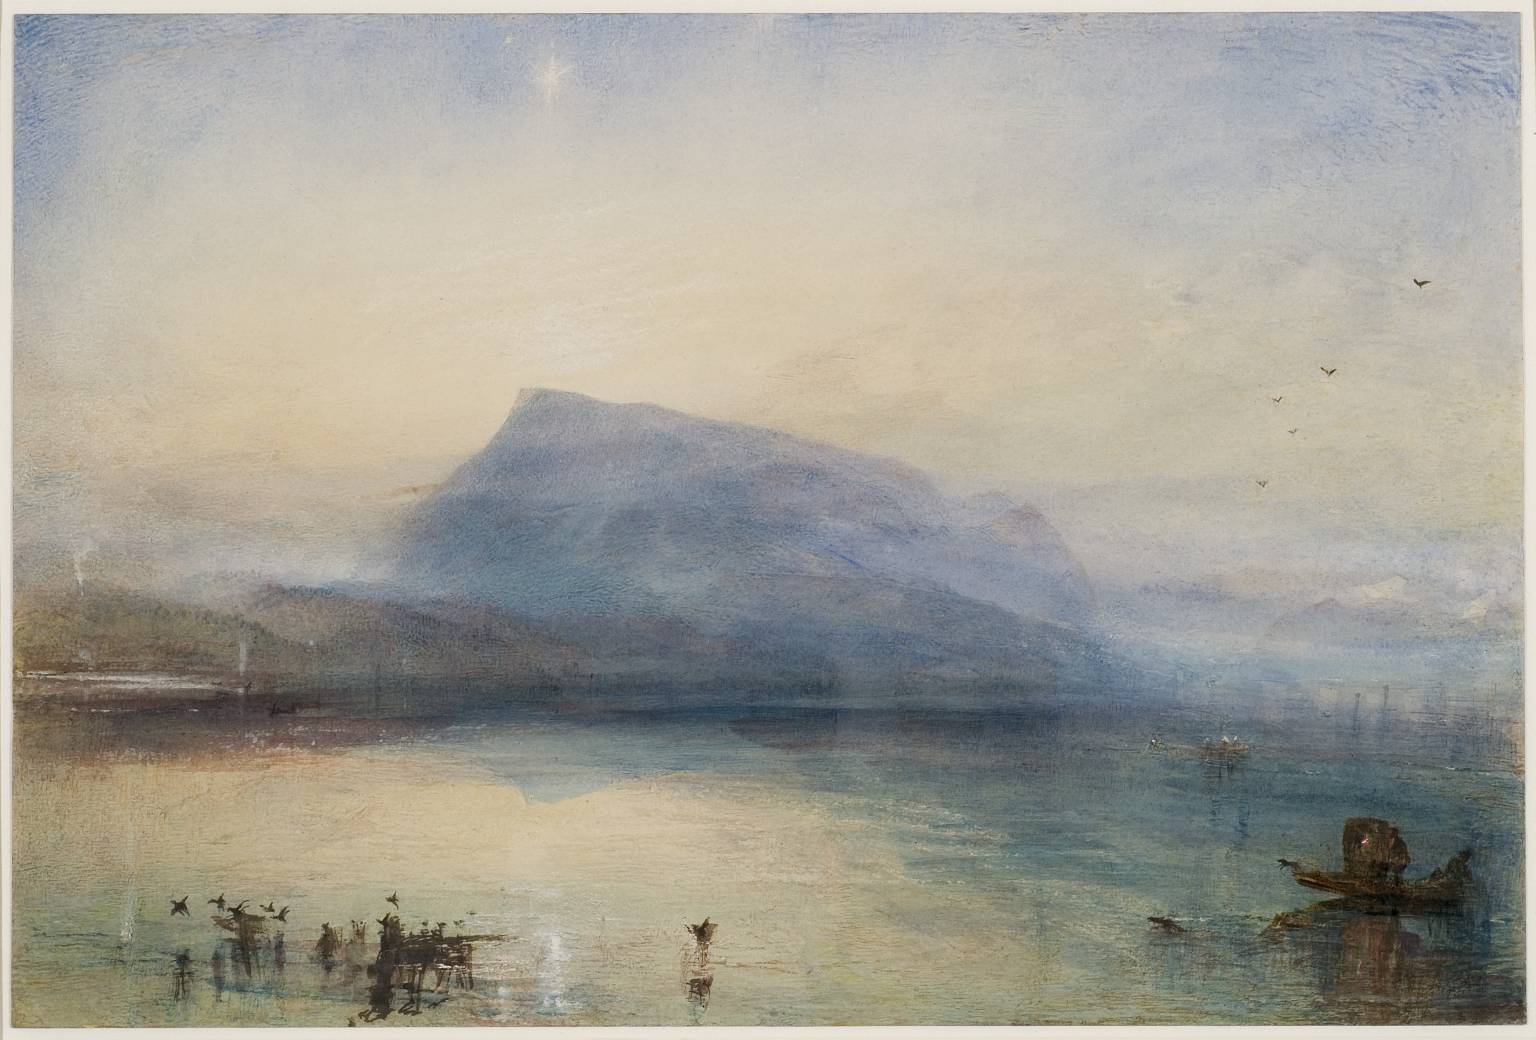 Il Blu Rigi, alba by Joseph Mallord William Turner - 1842 Tate Modern